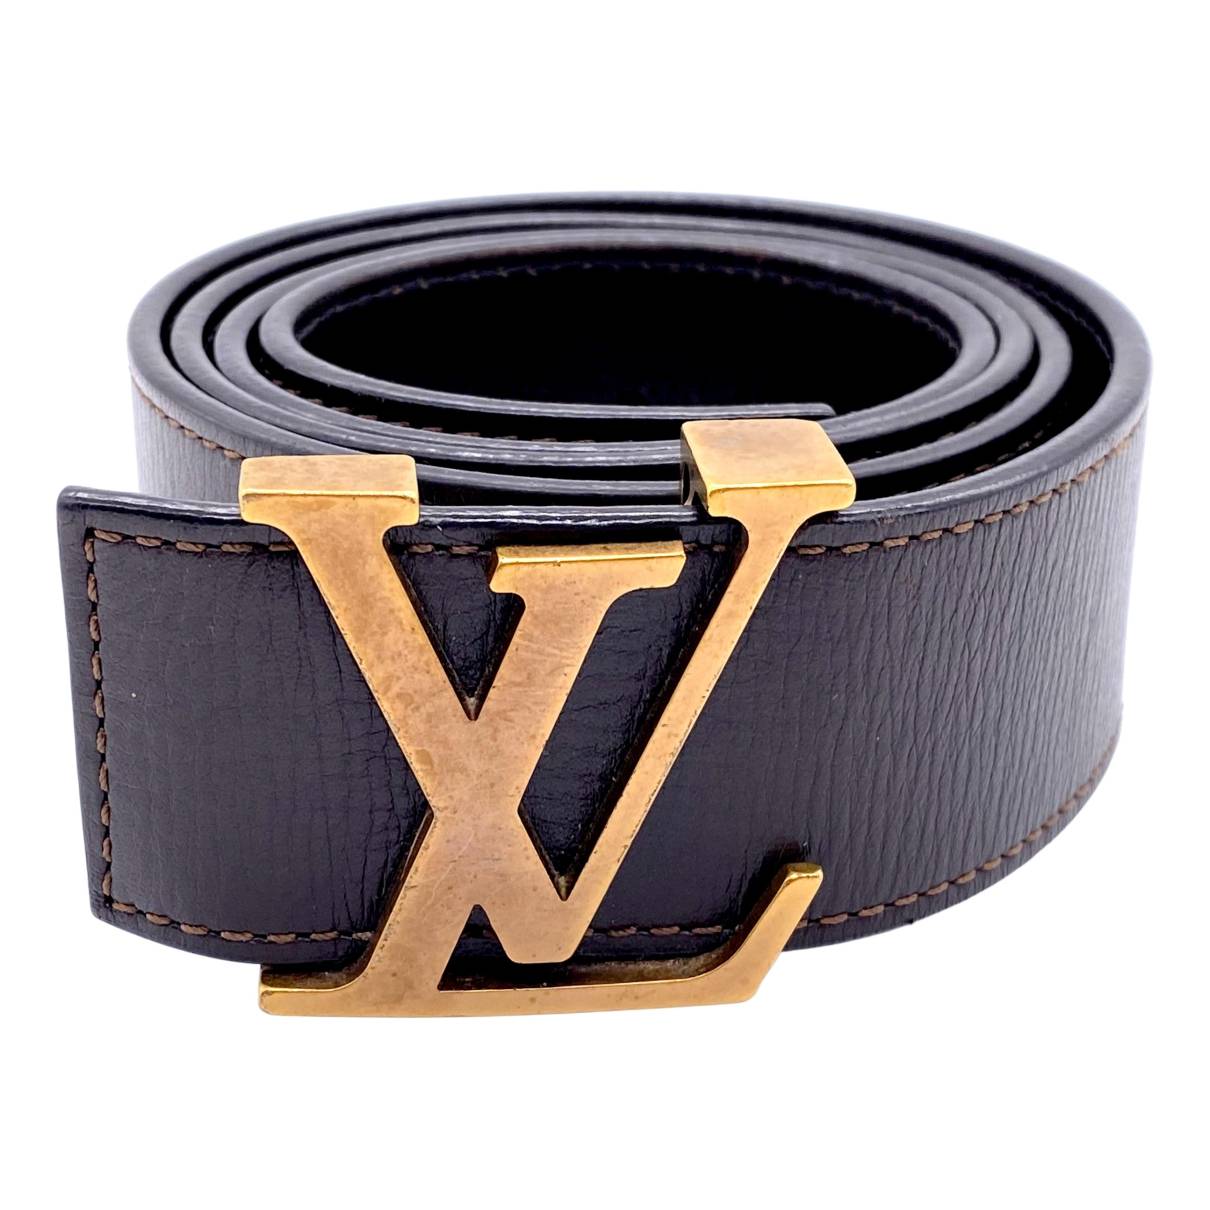 Louis Vuitton 2012 Initiales Reversible Belt - Brown Belts